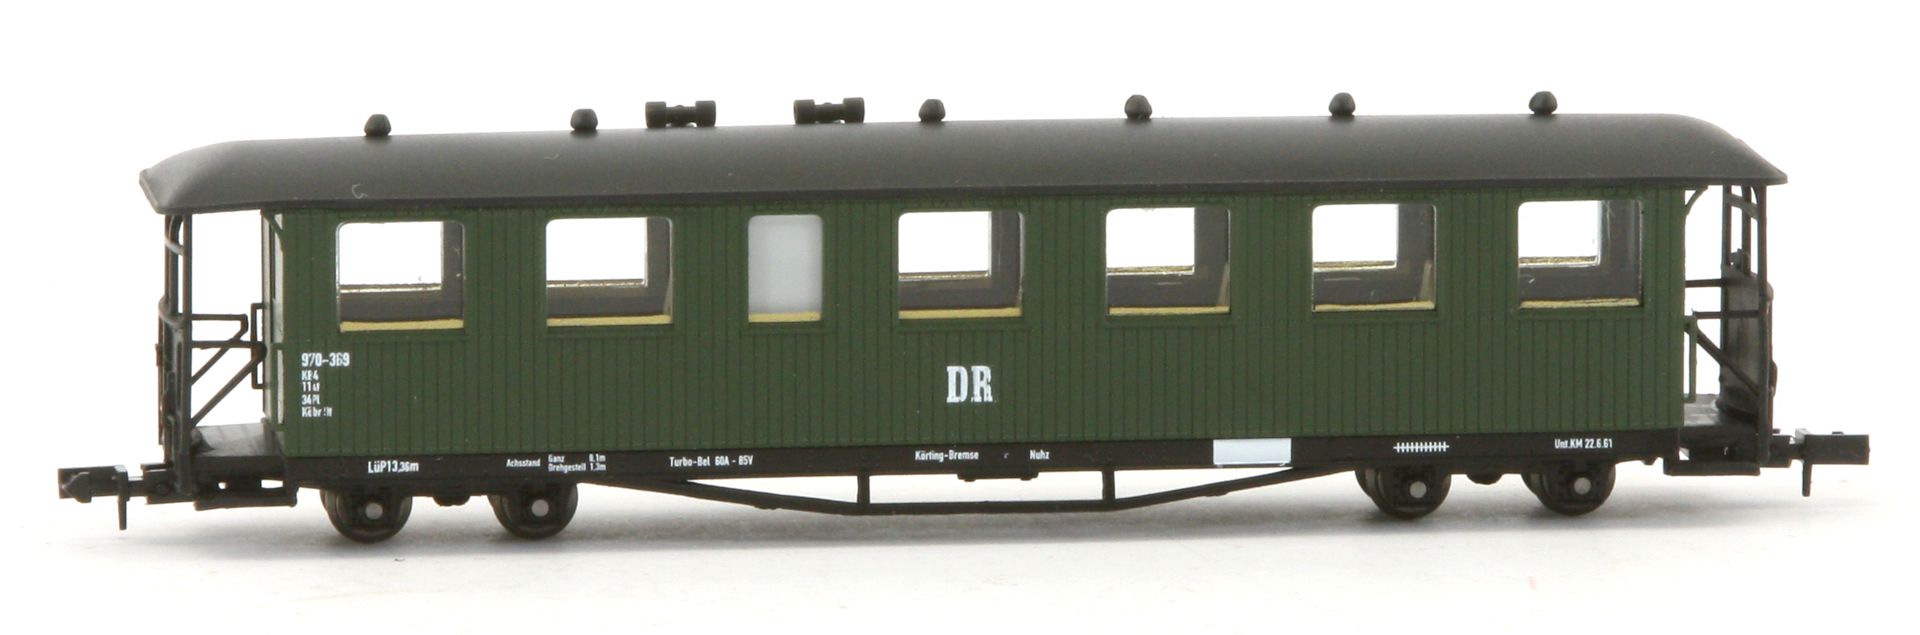 Karsei 29225 - Personenwagen 720, DR, Ep.III-IV, holzbeplankt, 1. BN